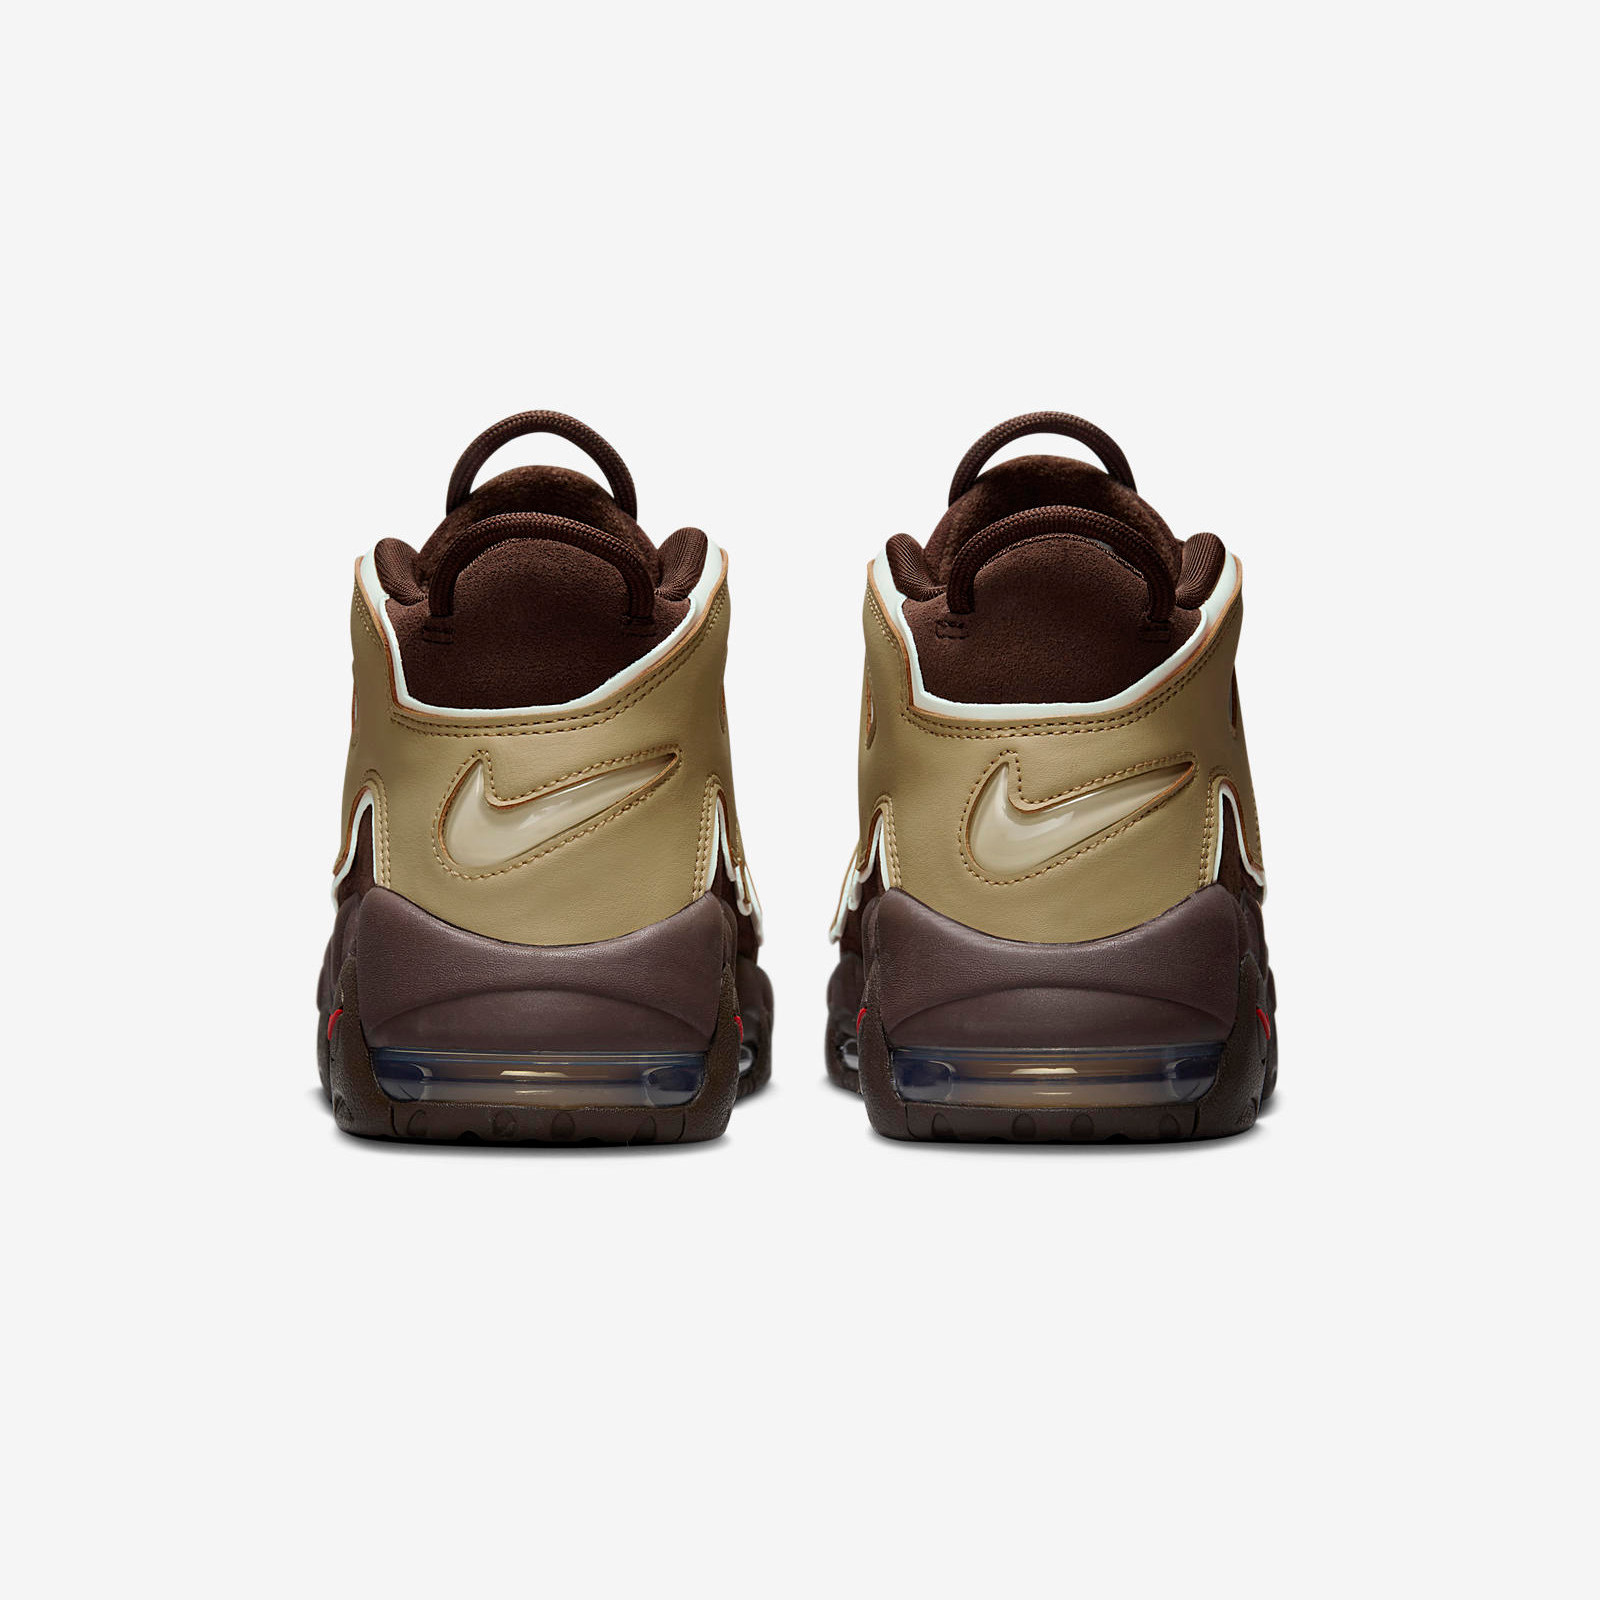 Nike Air More Uptempo
« Baroque Brown »